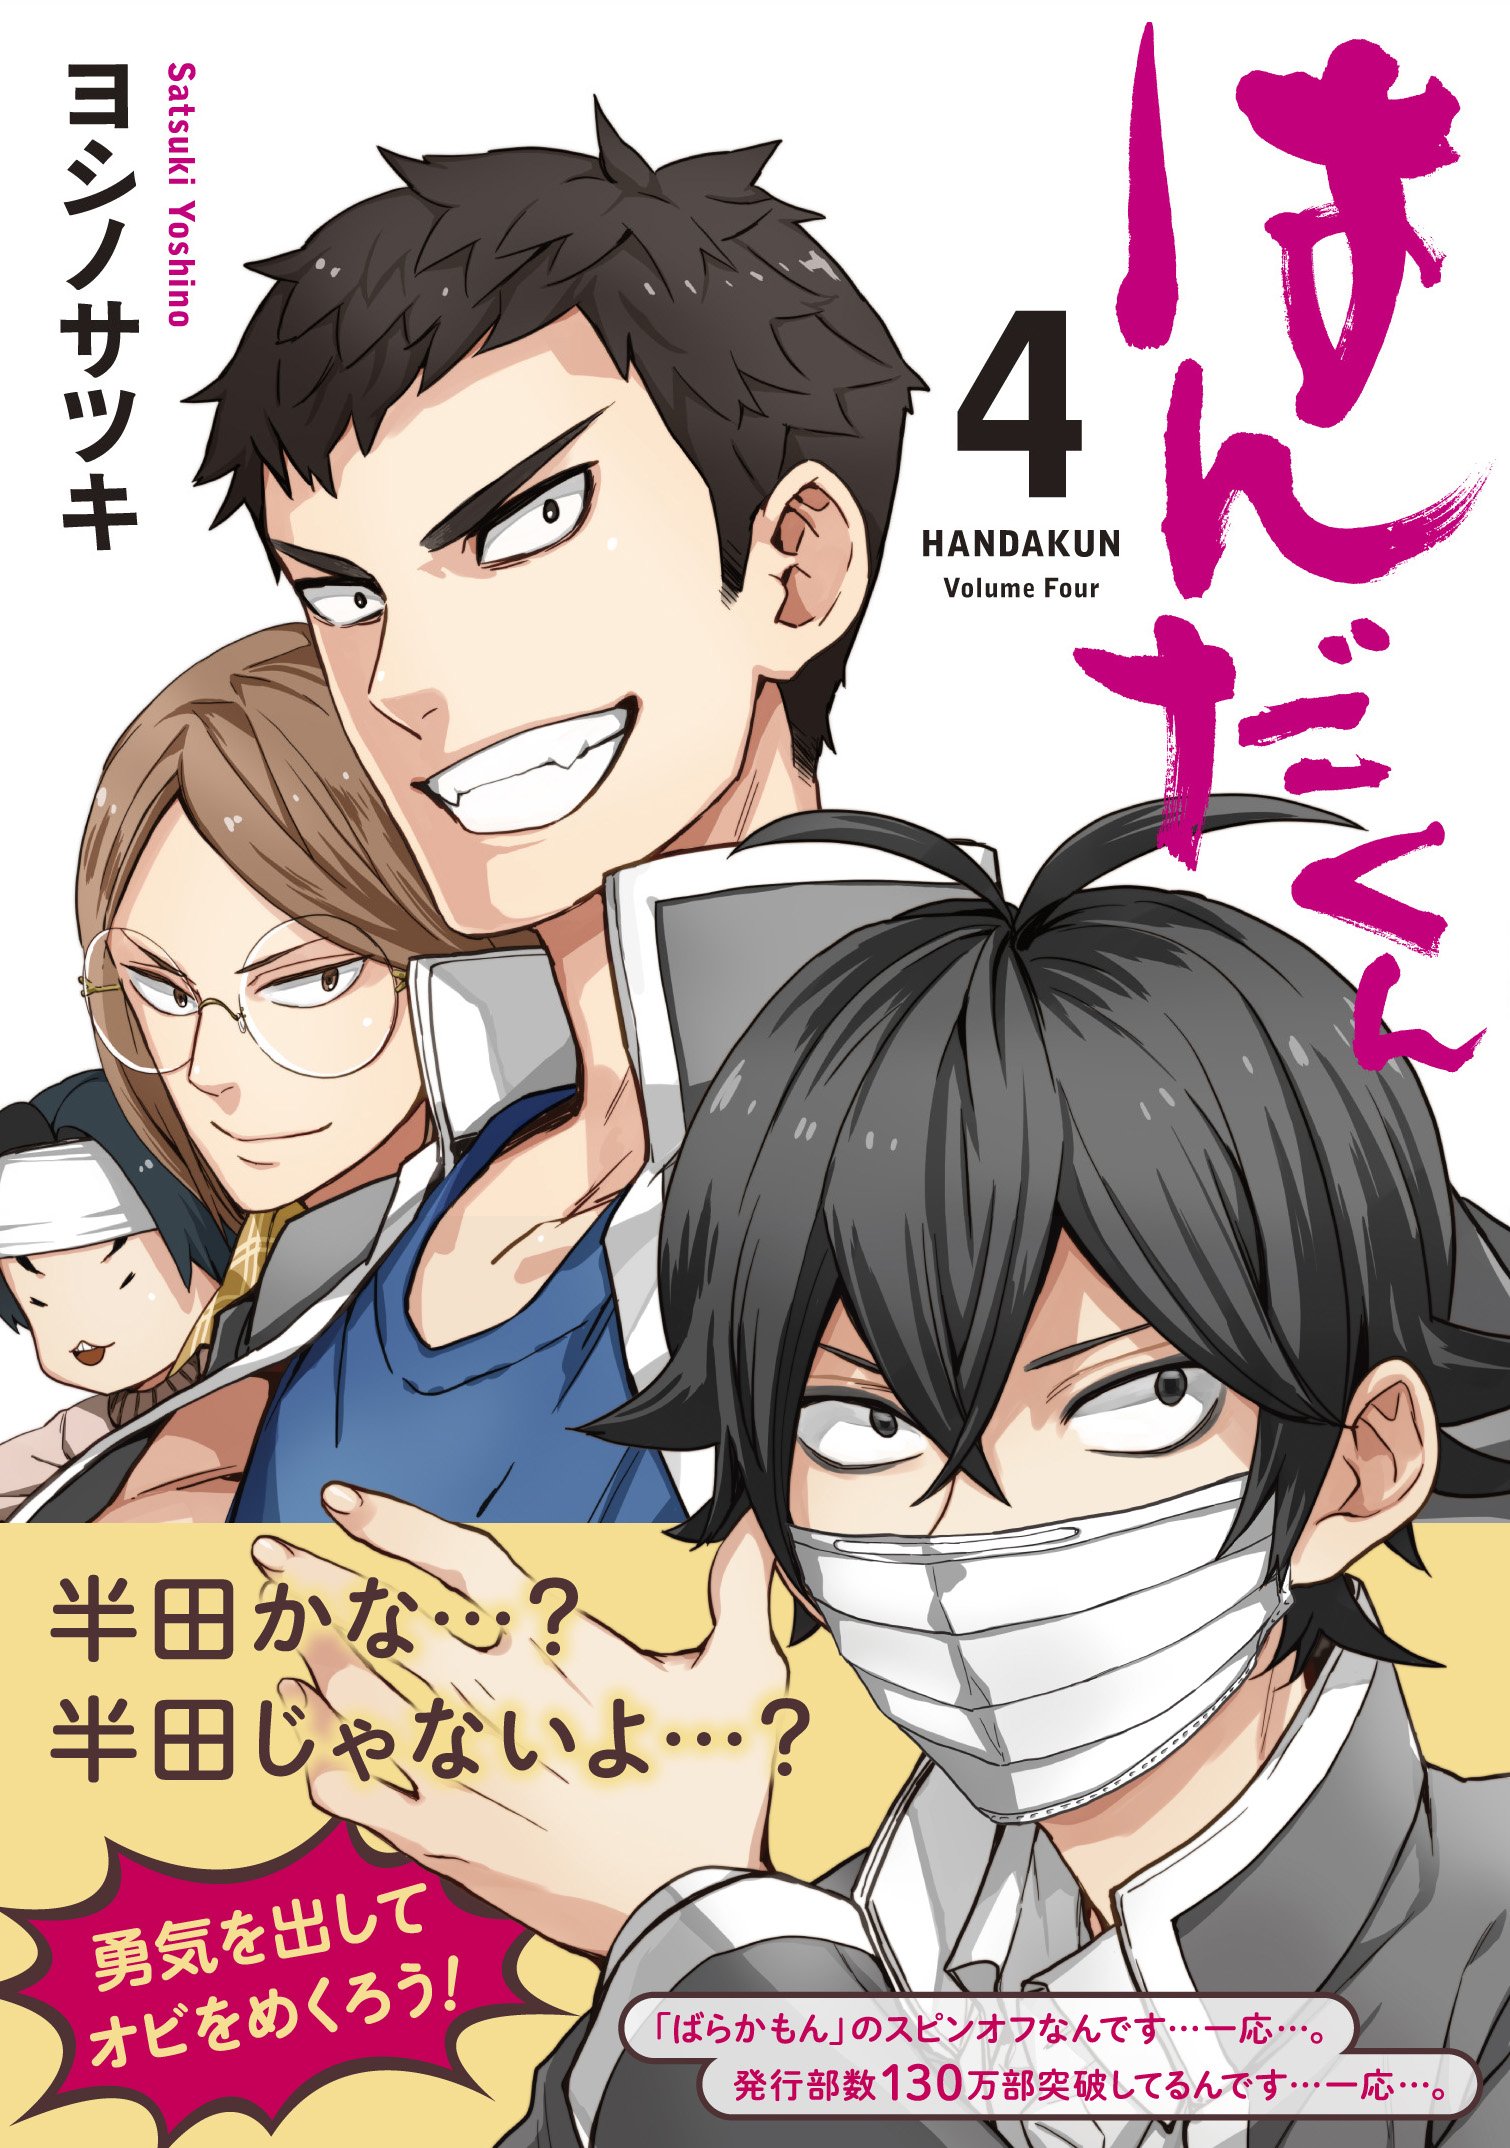 Barakamon Manga's New Limited Serialization Ends - News - Anime News Network